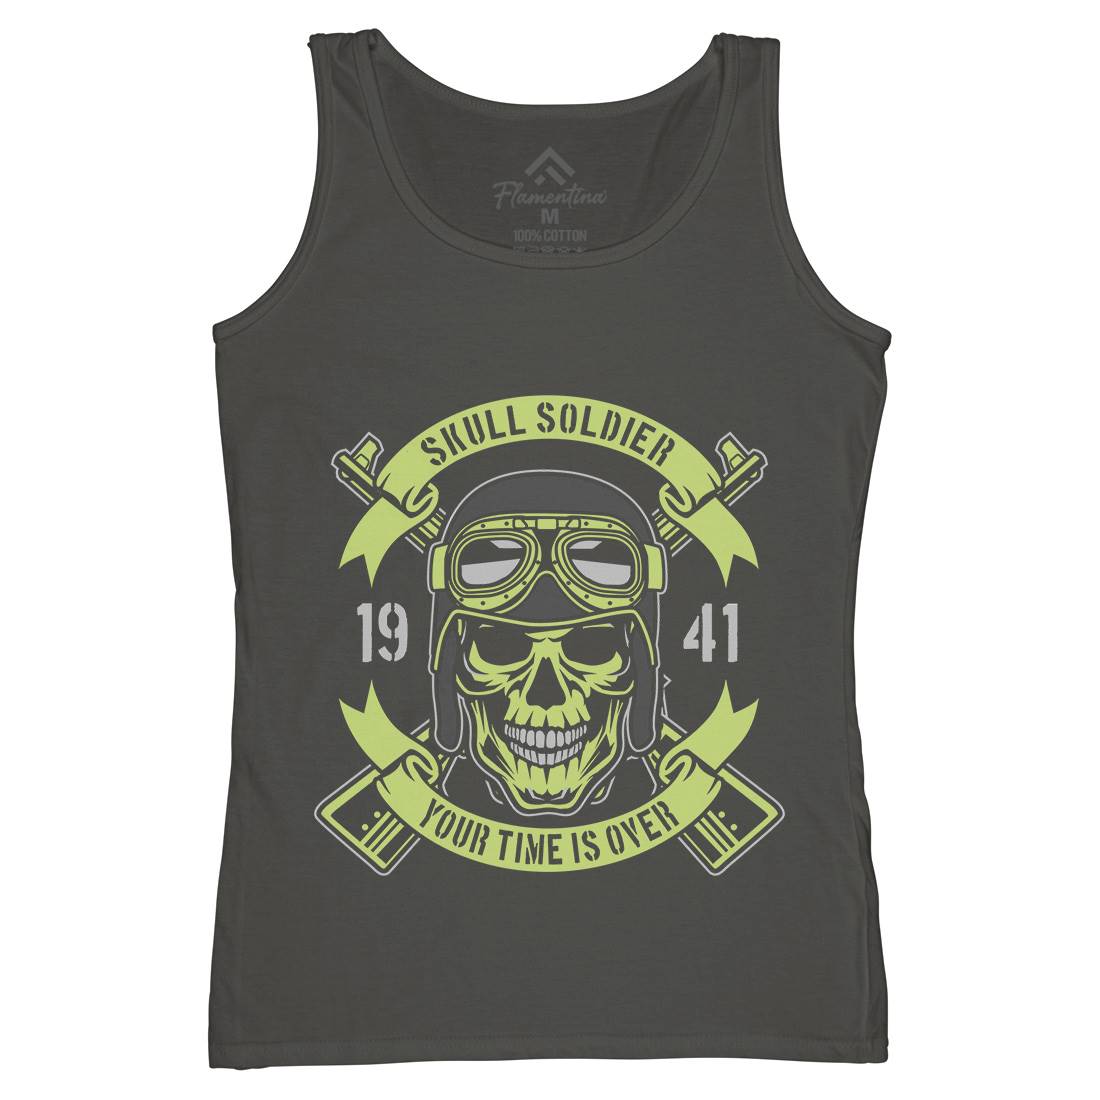 Skull Soldier Womens Organic Tank Top Vest Army D579